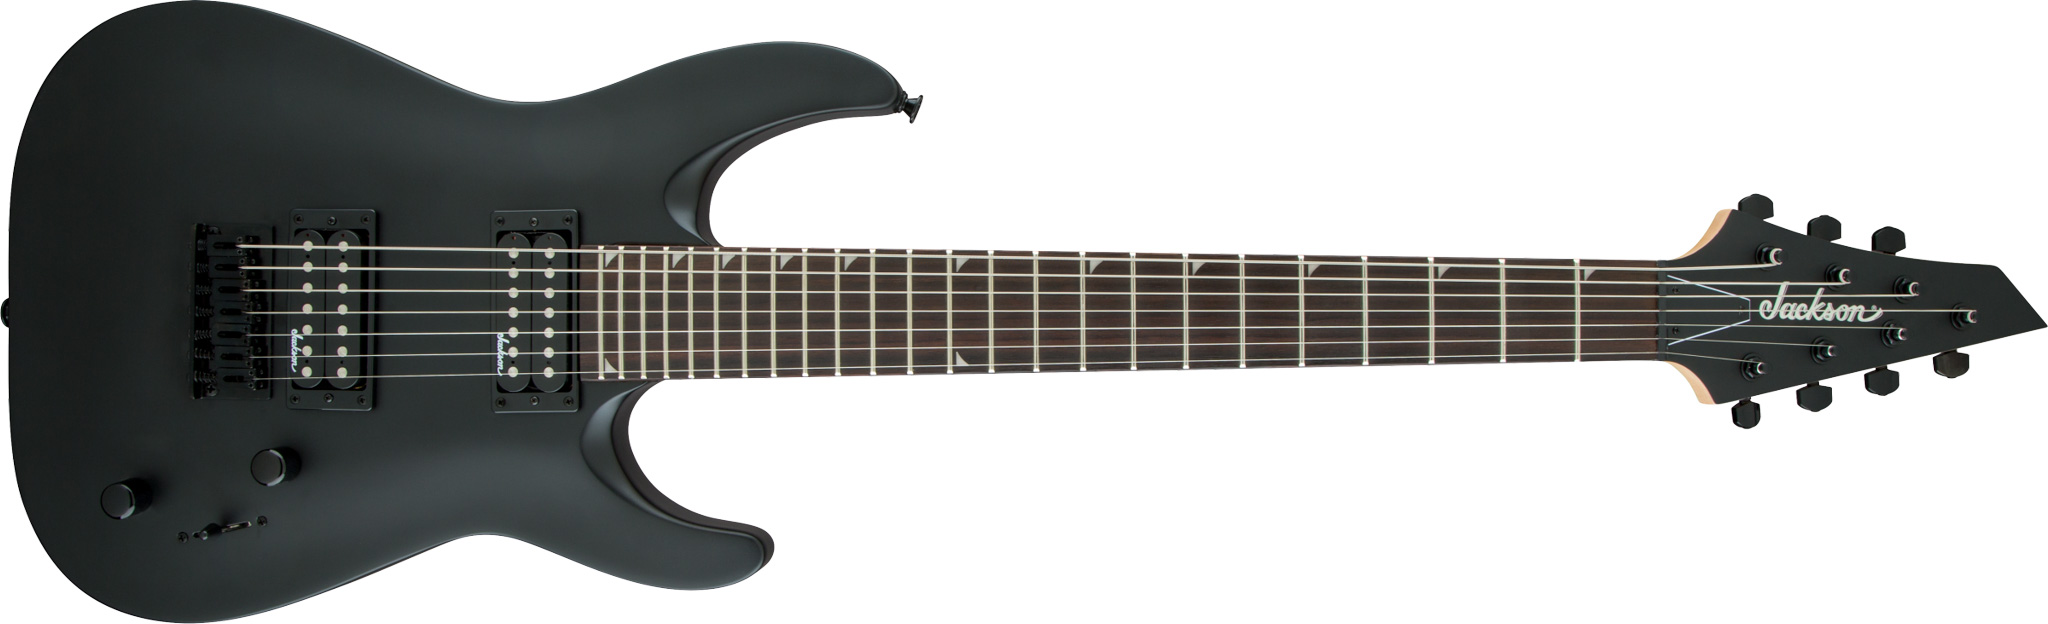 Jackson Dinky Arch Topp JS22-7 DKA elektrisk gitar